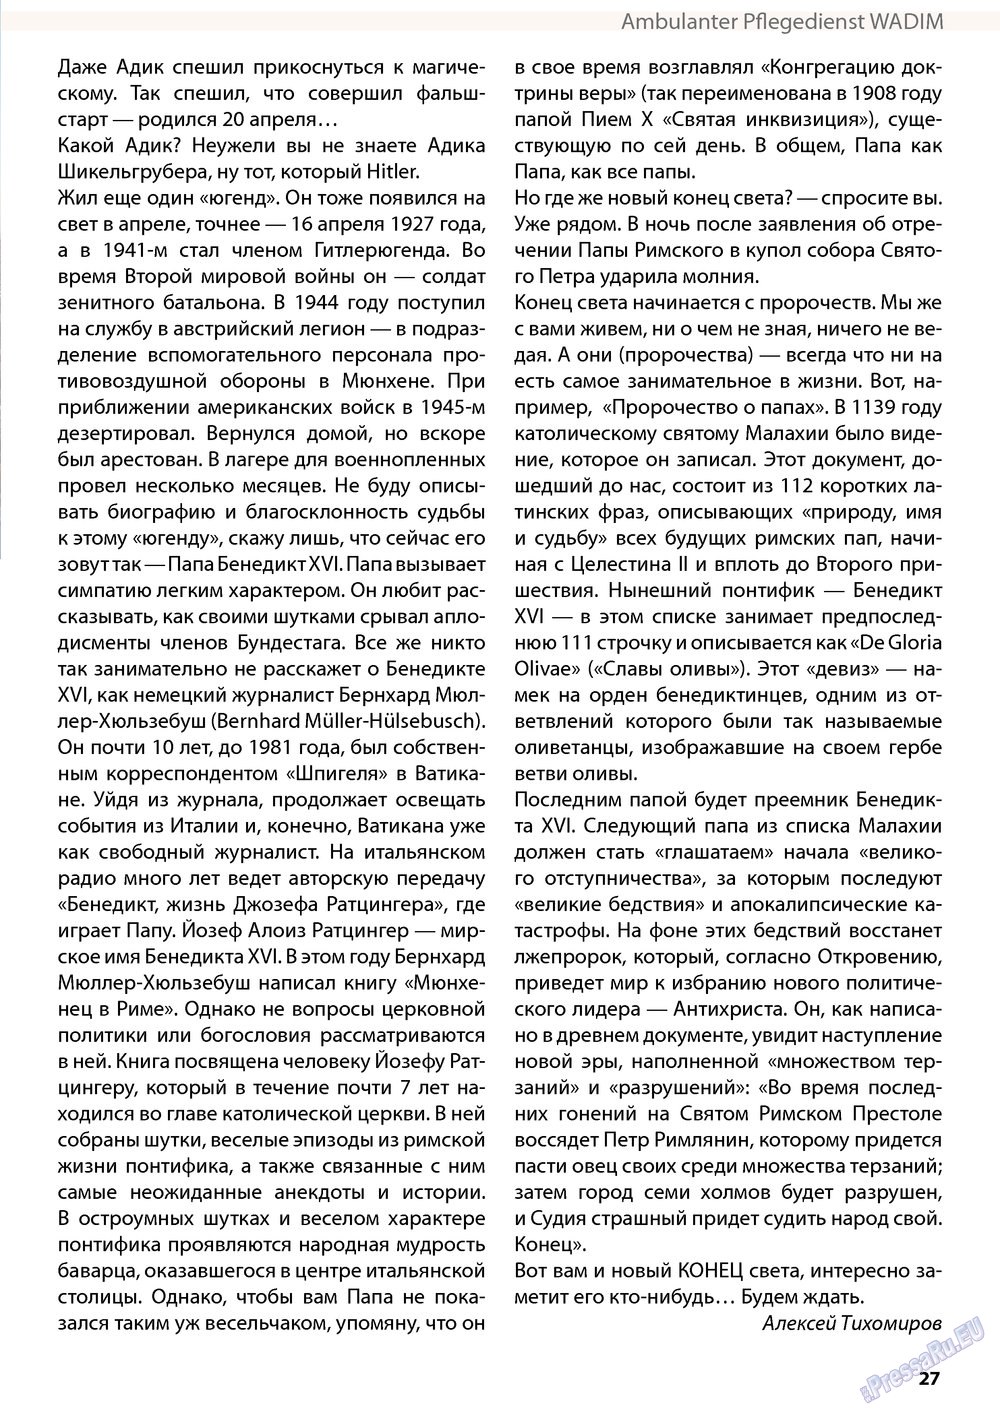 Wadim, журнал. 2013 №4 стр.27